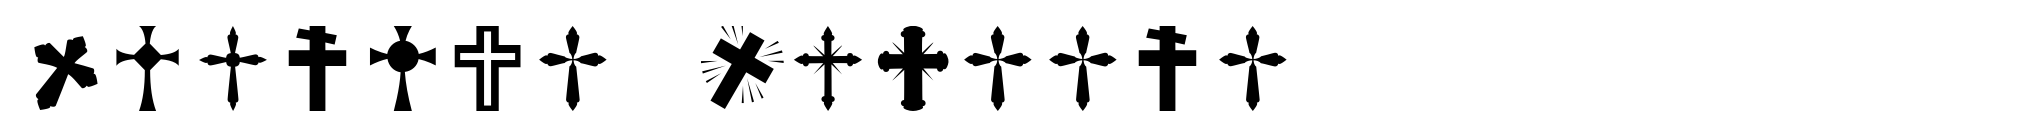 Altemus Crosses image